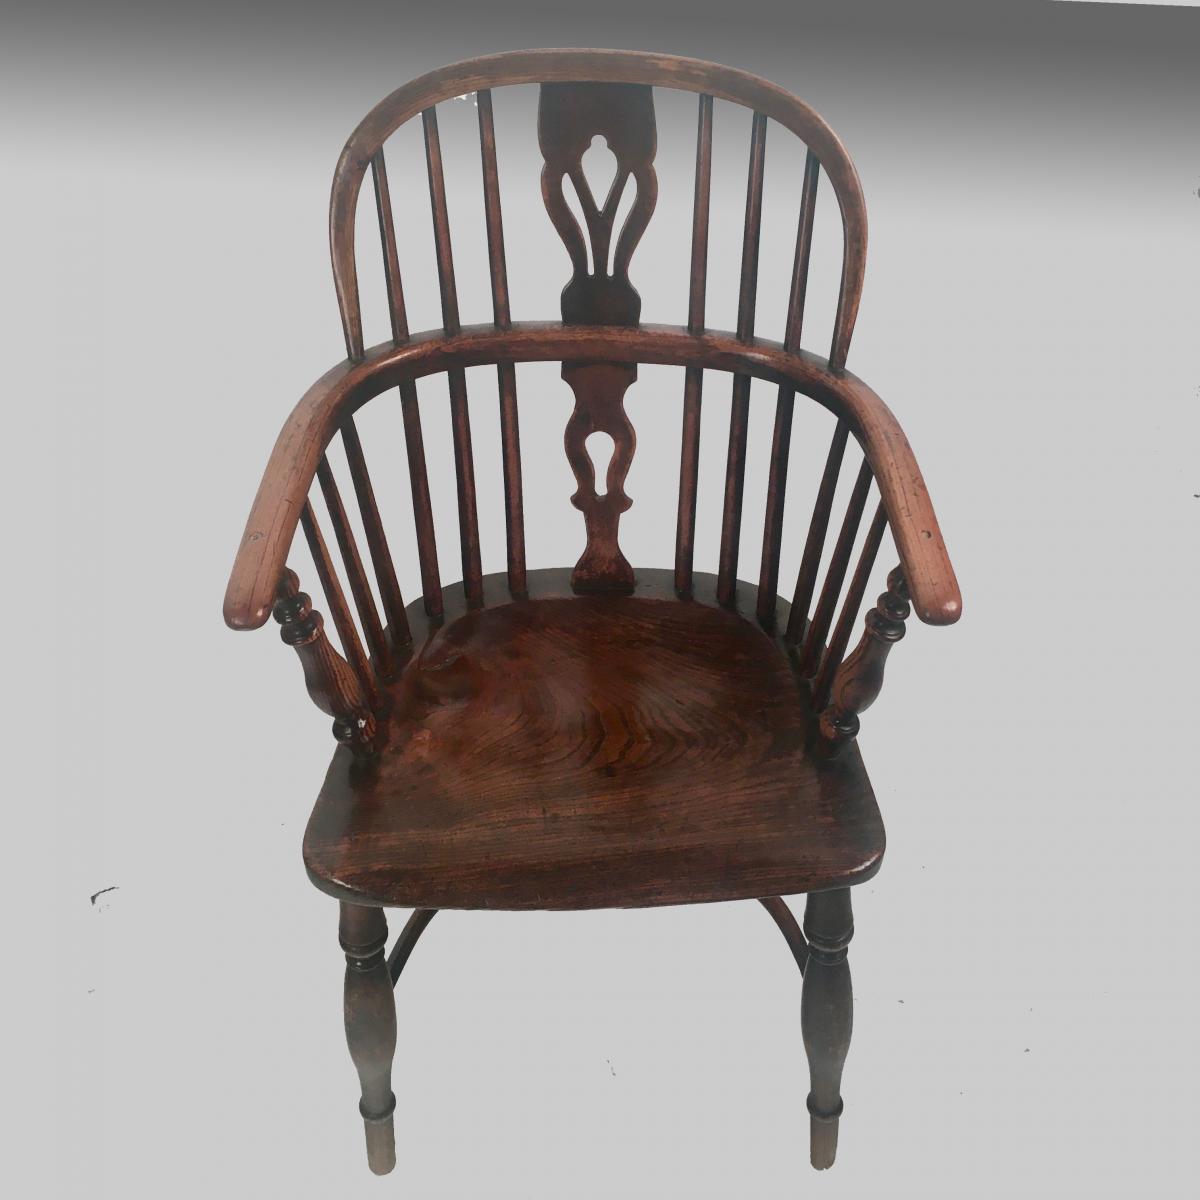 19th century Ash & elm lowback Windsor armchair